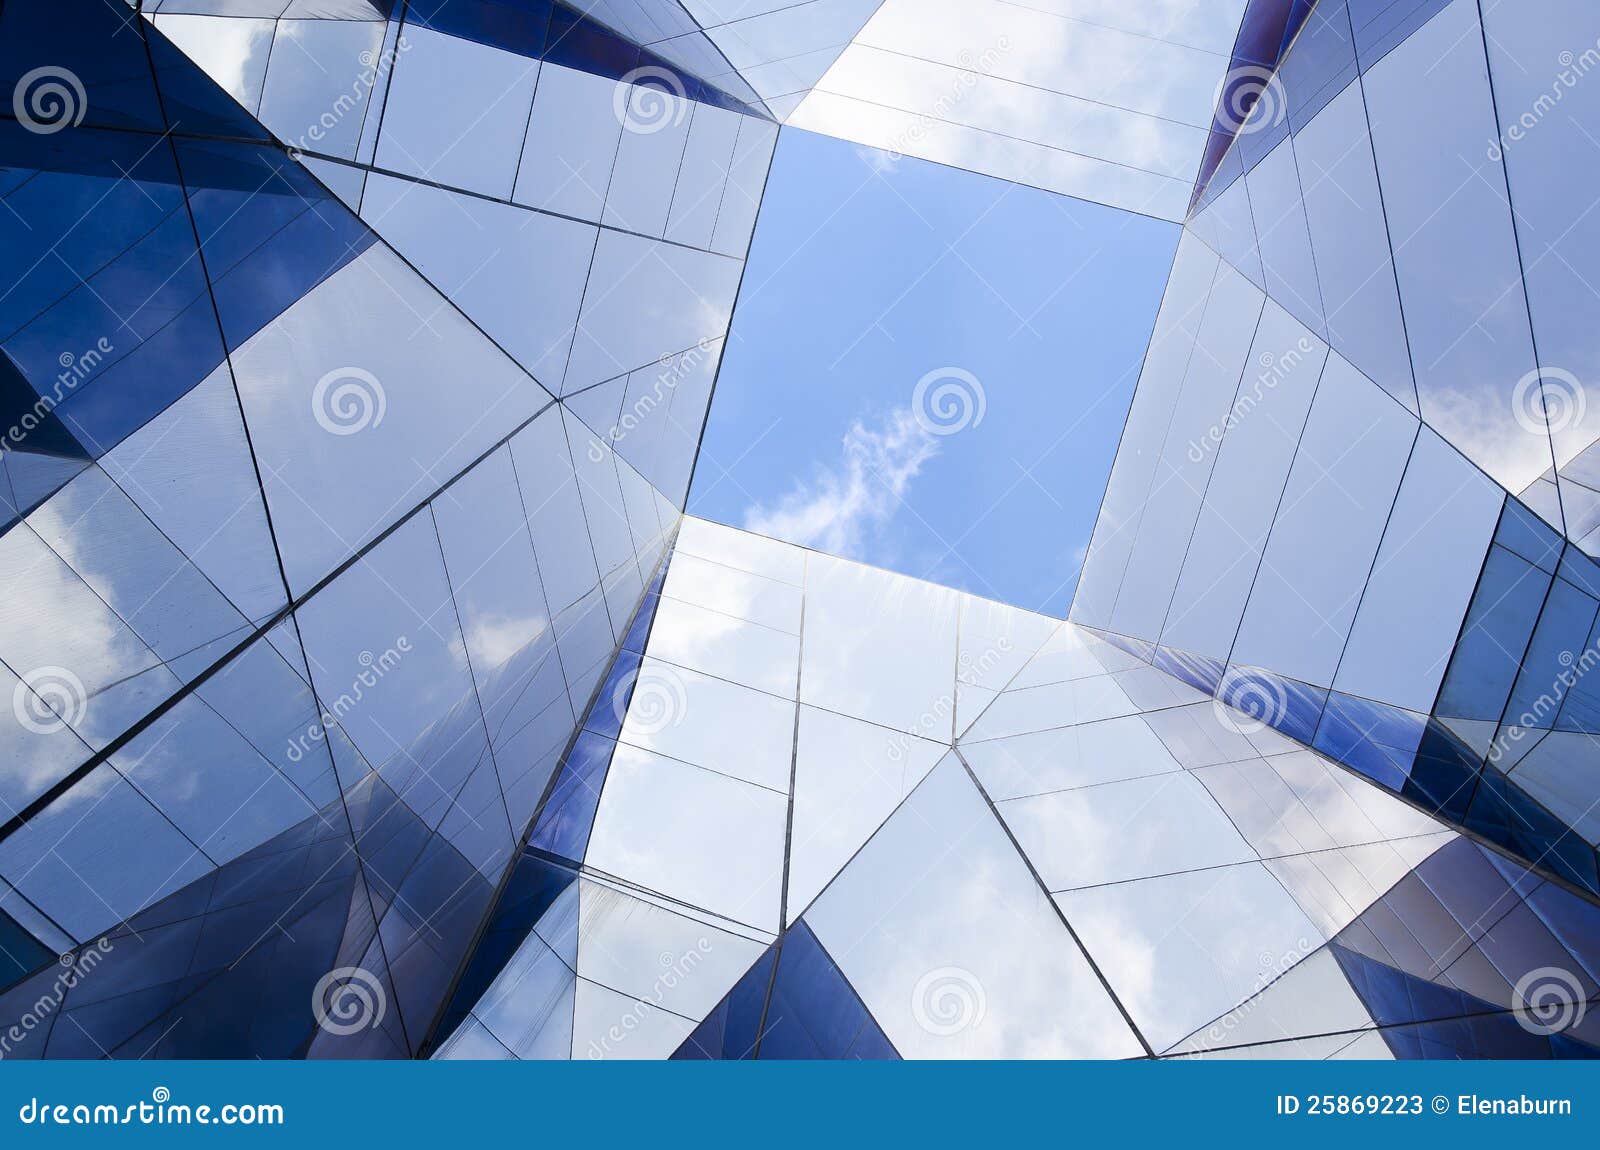 modern glass architecture